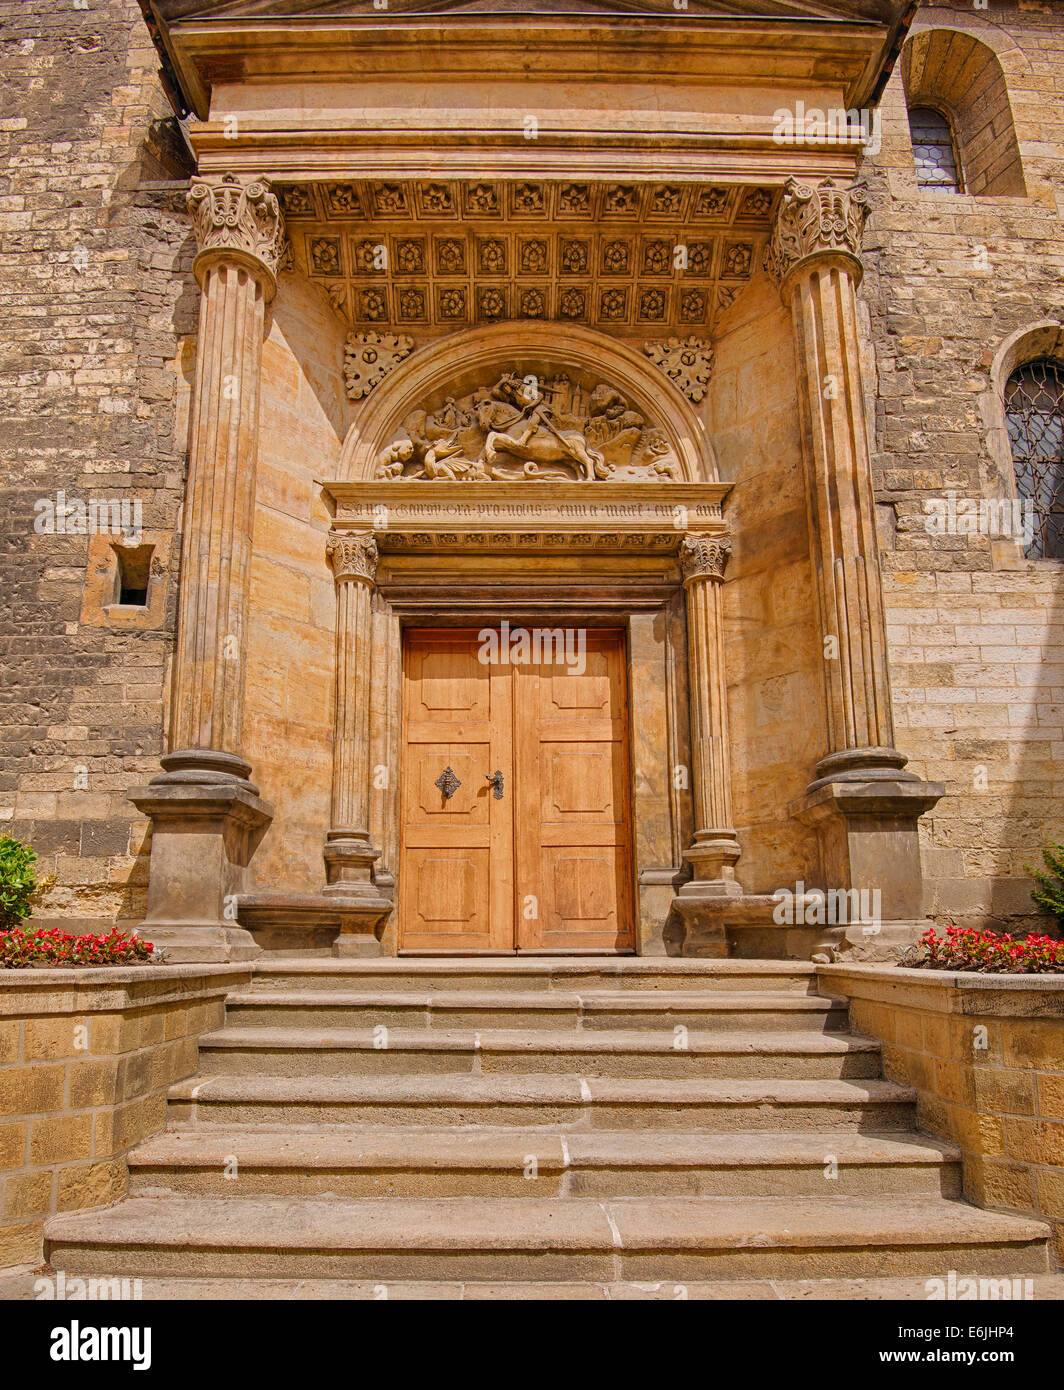 Southern Renaissance portal of the St. George's Basilica, Prague. Hdr image. Stock Photo